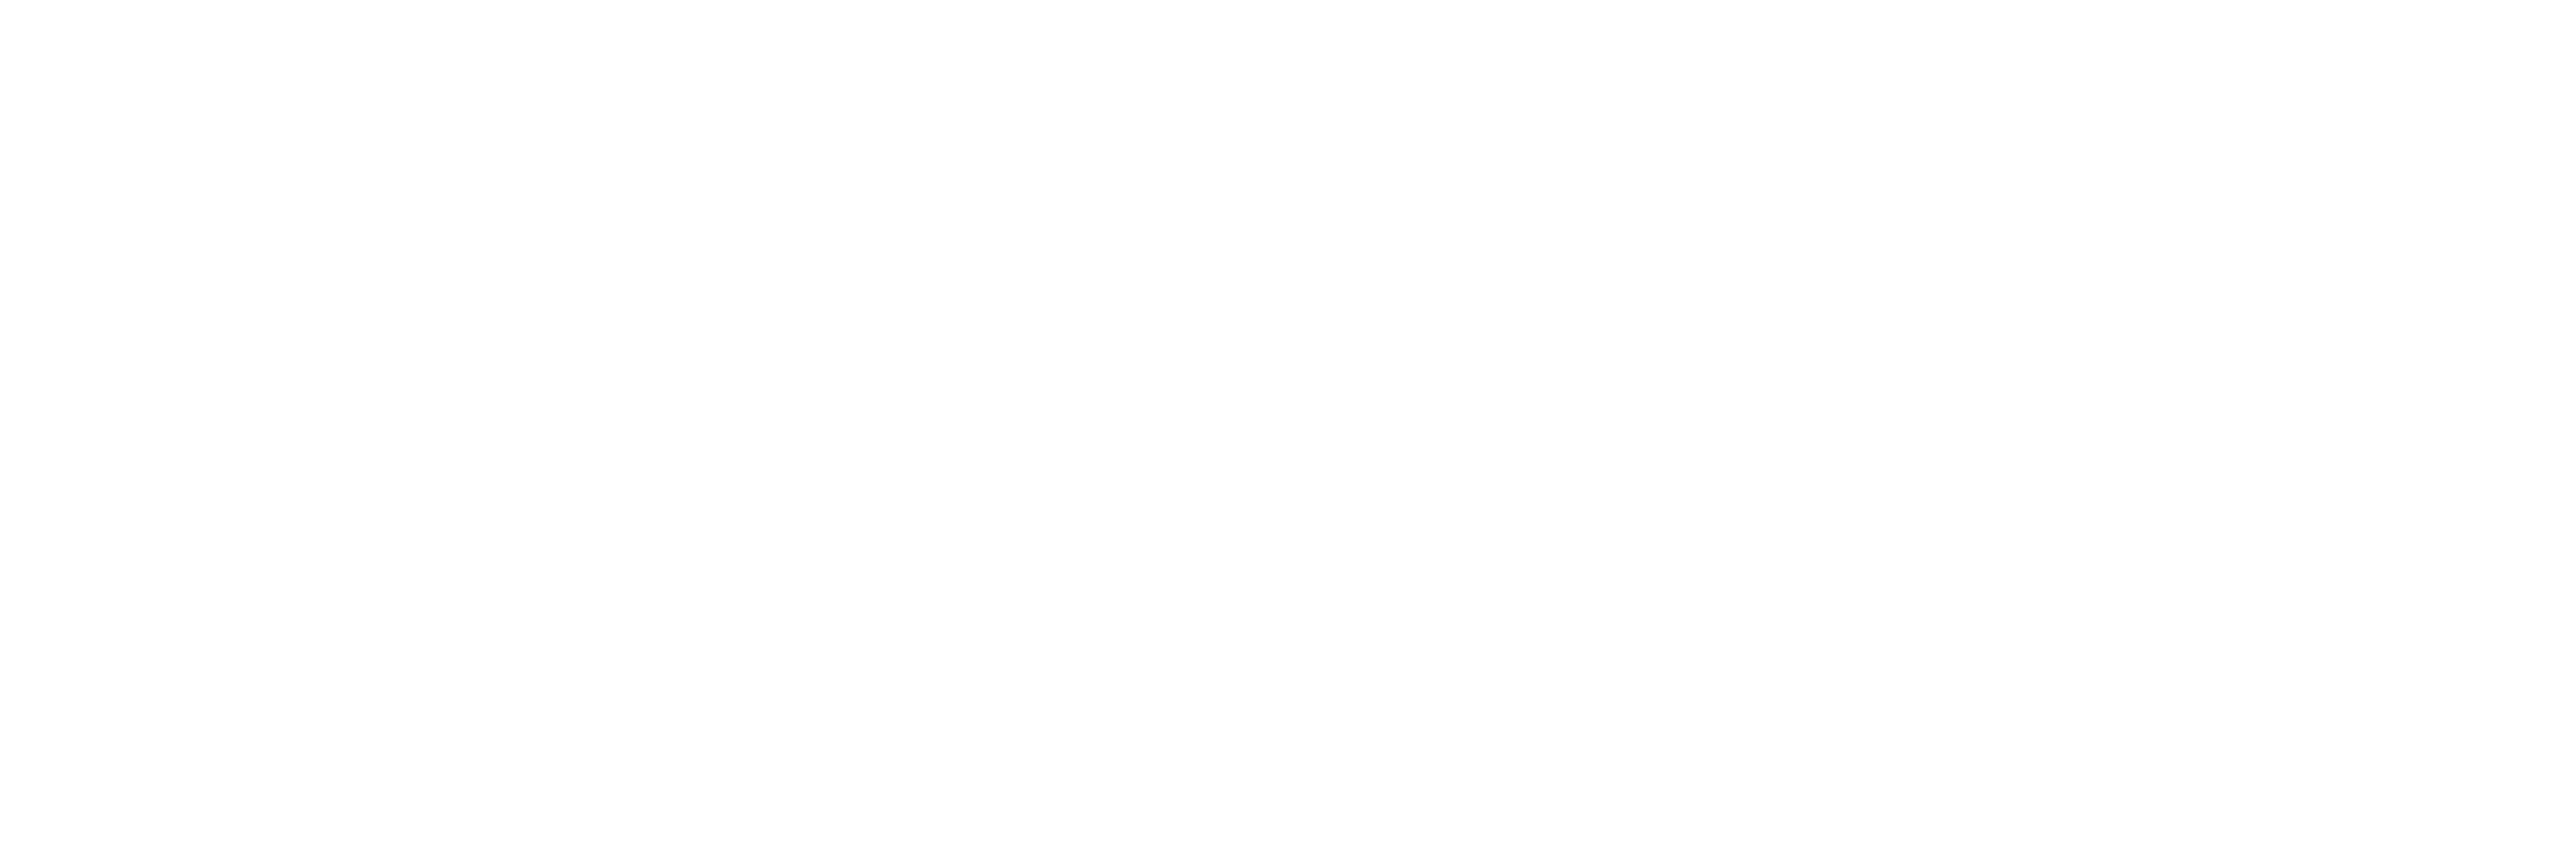 DSMZ Logo